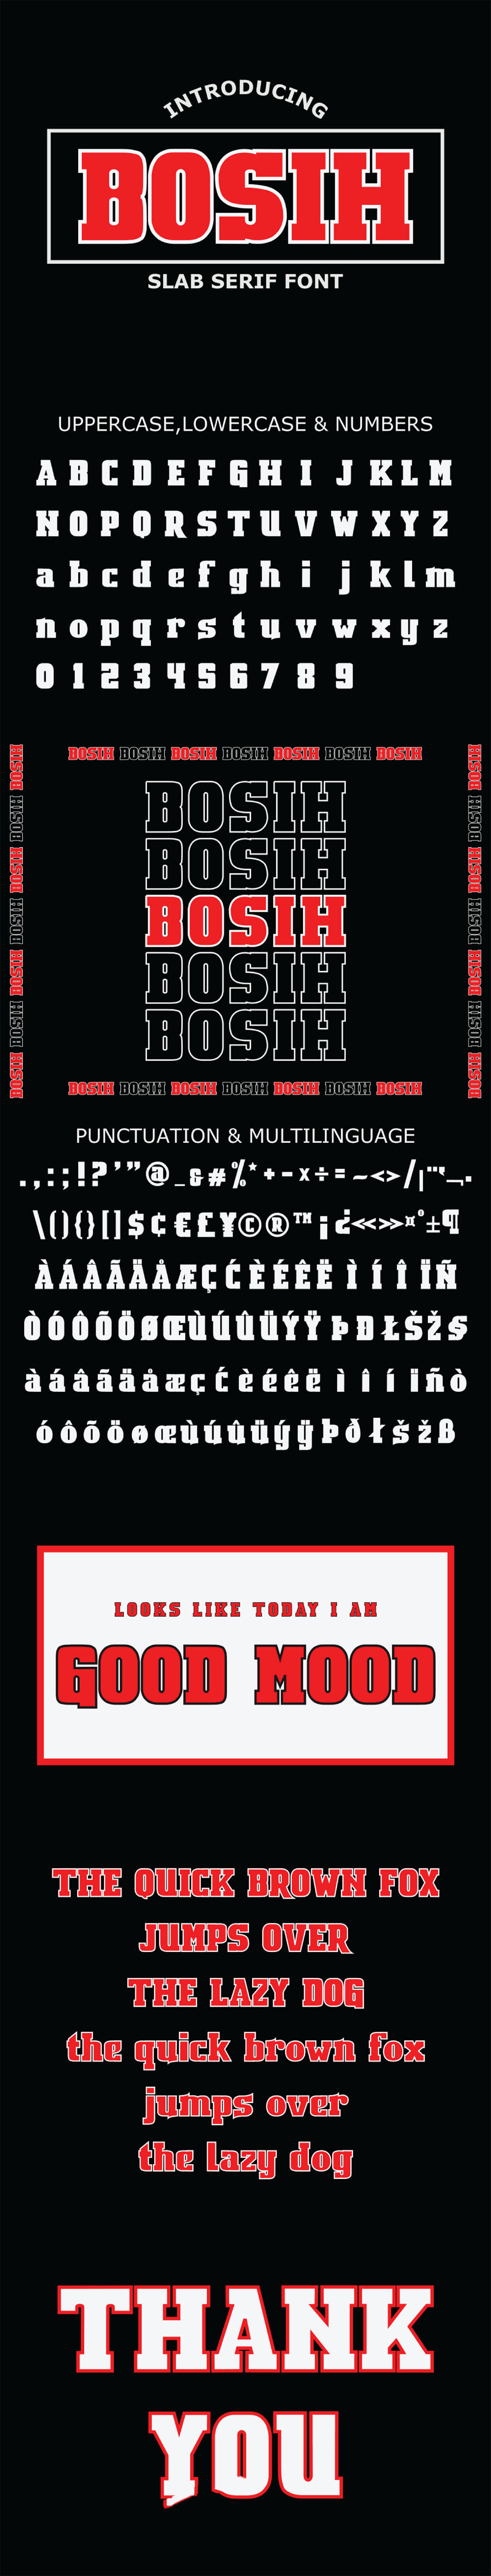 Free Bosih Slab Serif Font